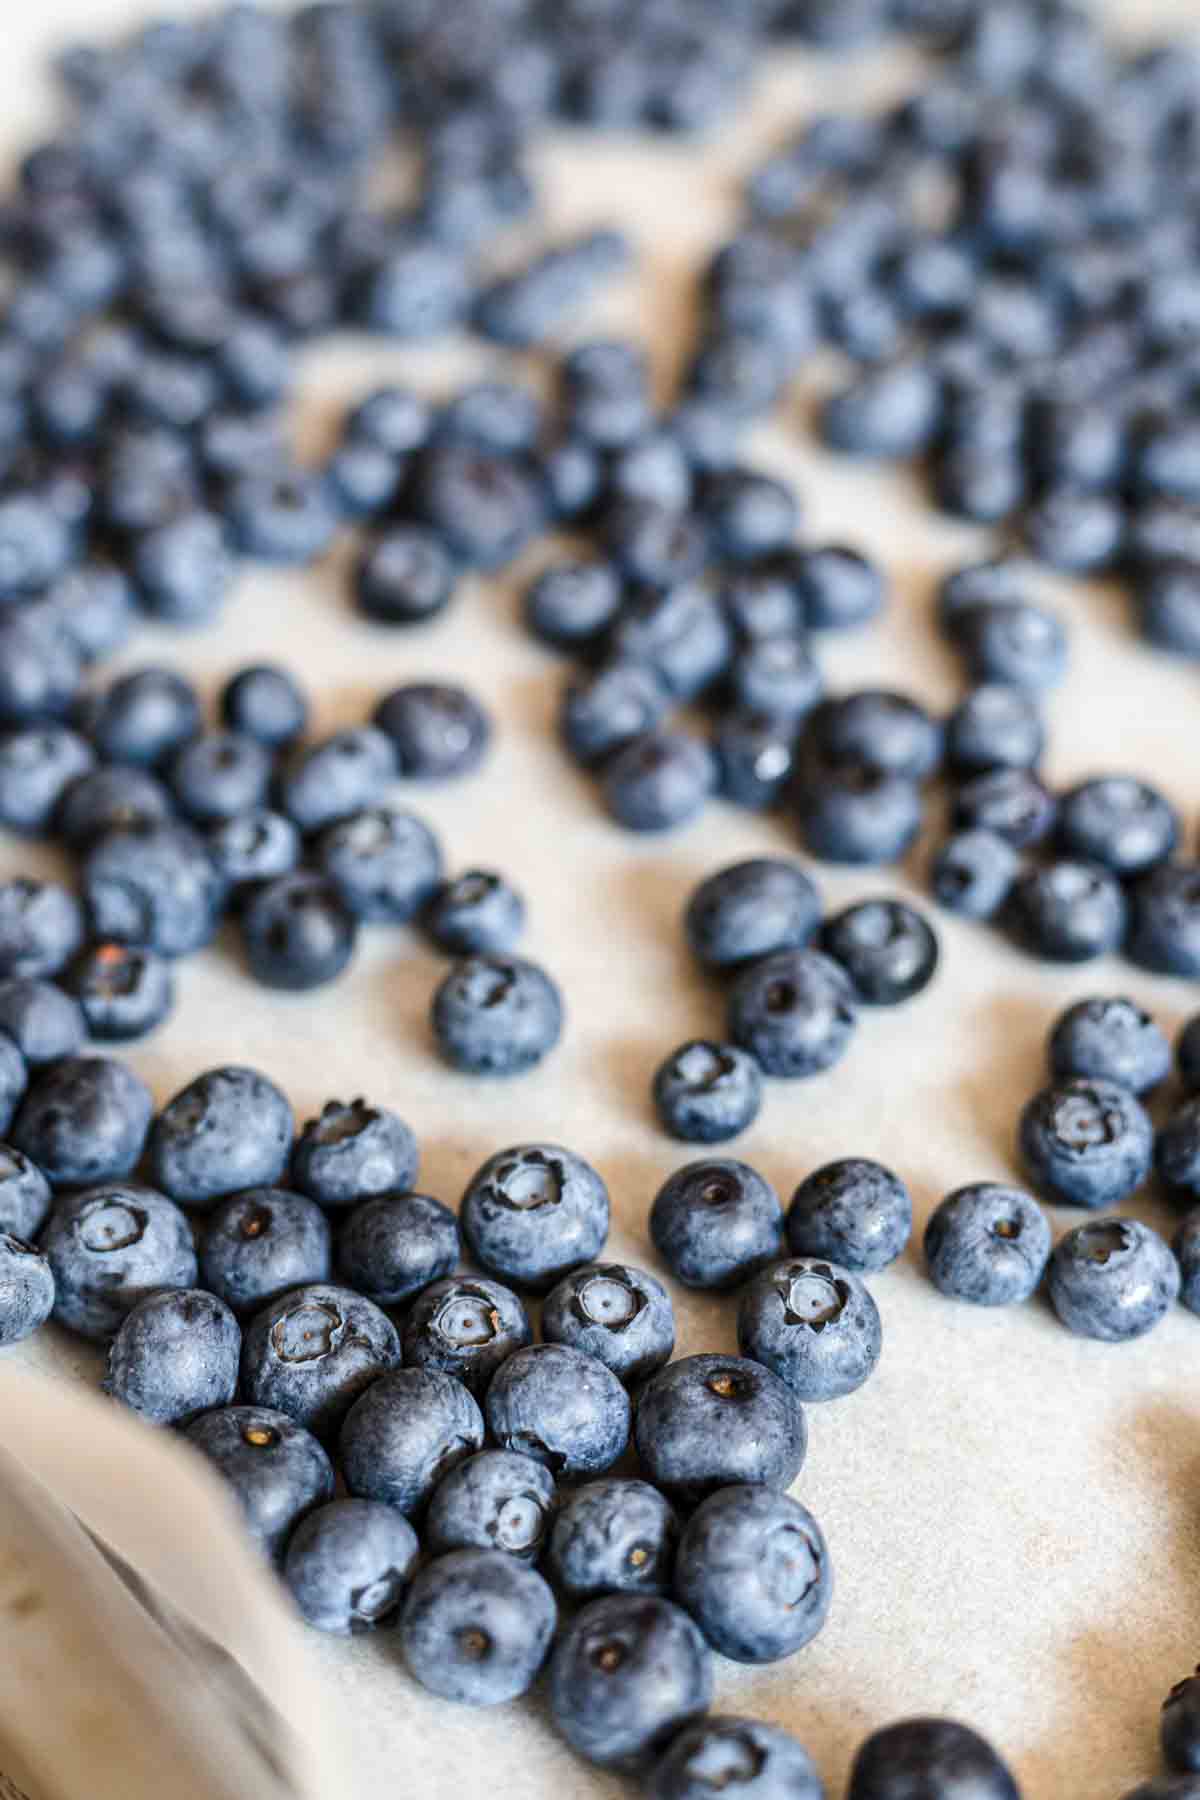 Blueberries on a baking sheet.